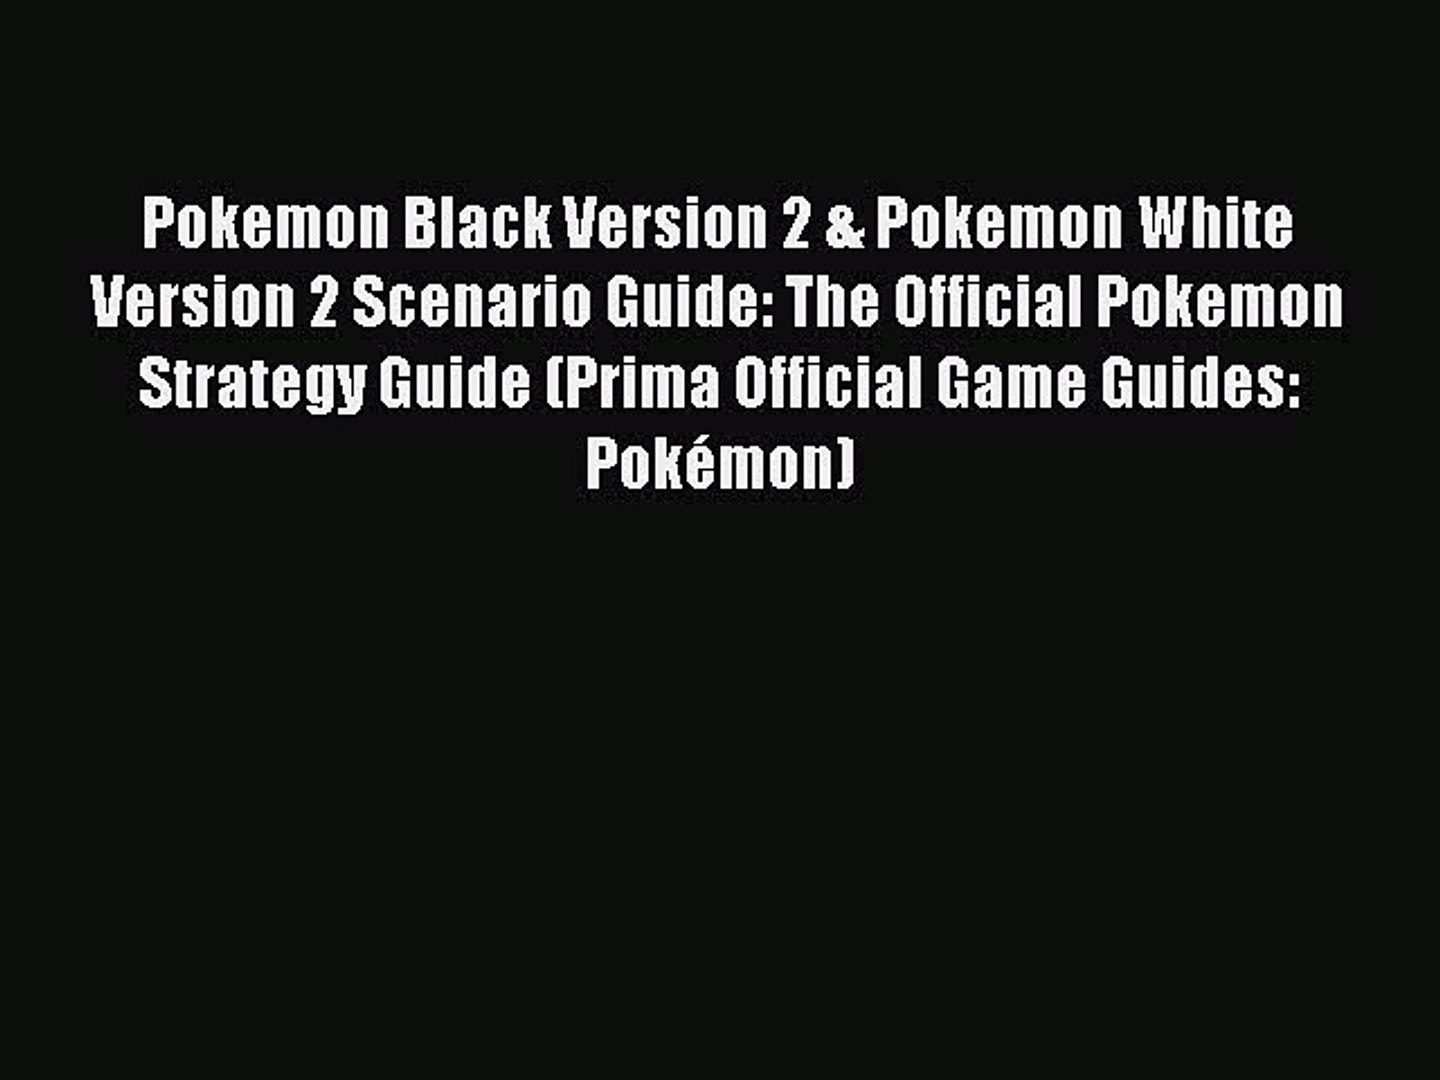 Pokemon, Black Version/Pokemon, White Version Handbook